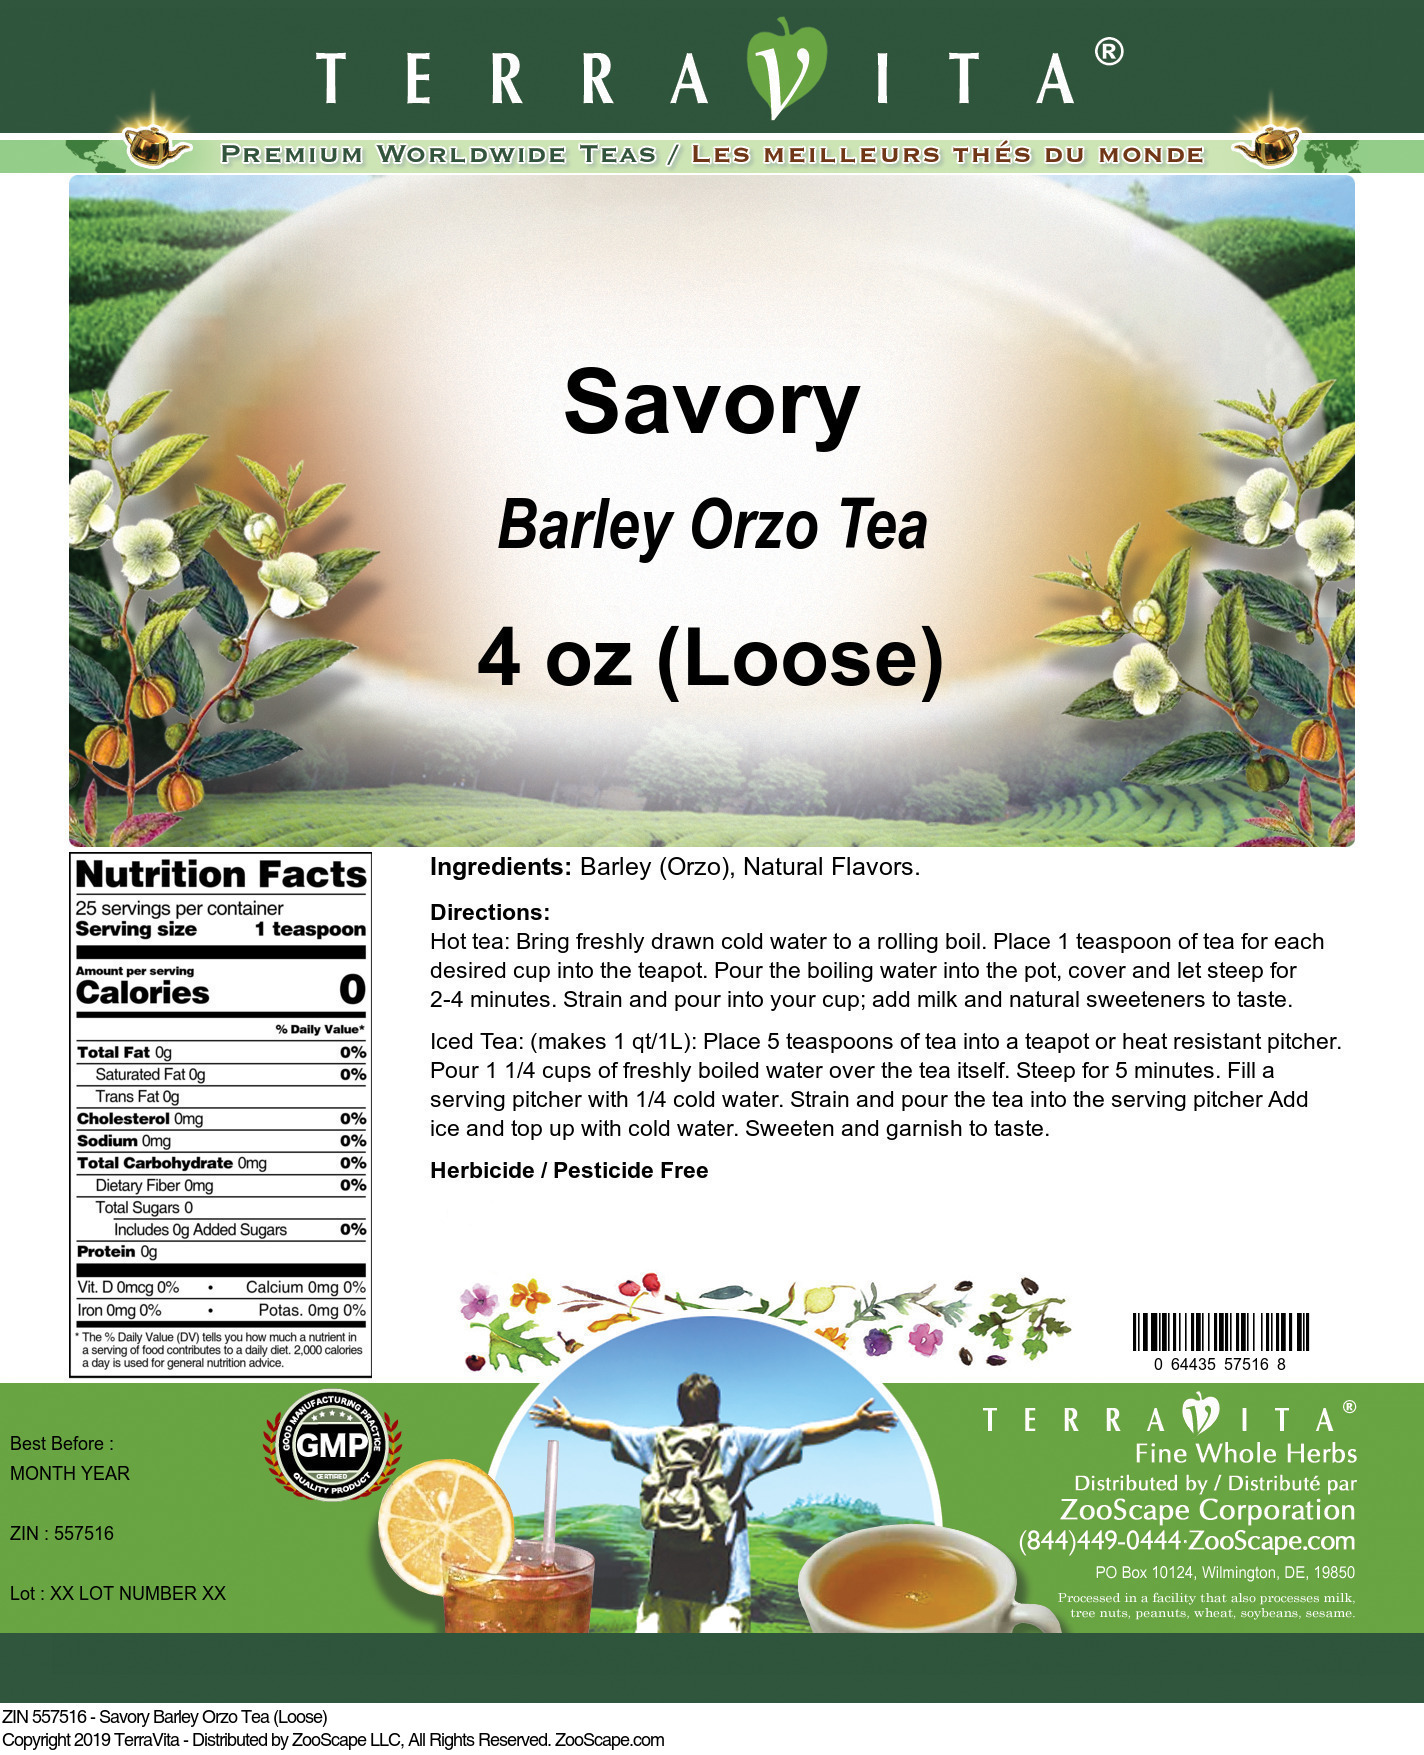 Savory Barley Orzo Tea (Loose) - Label